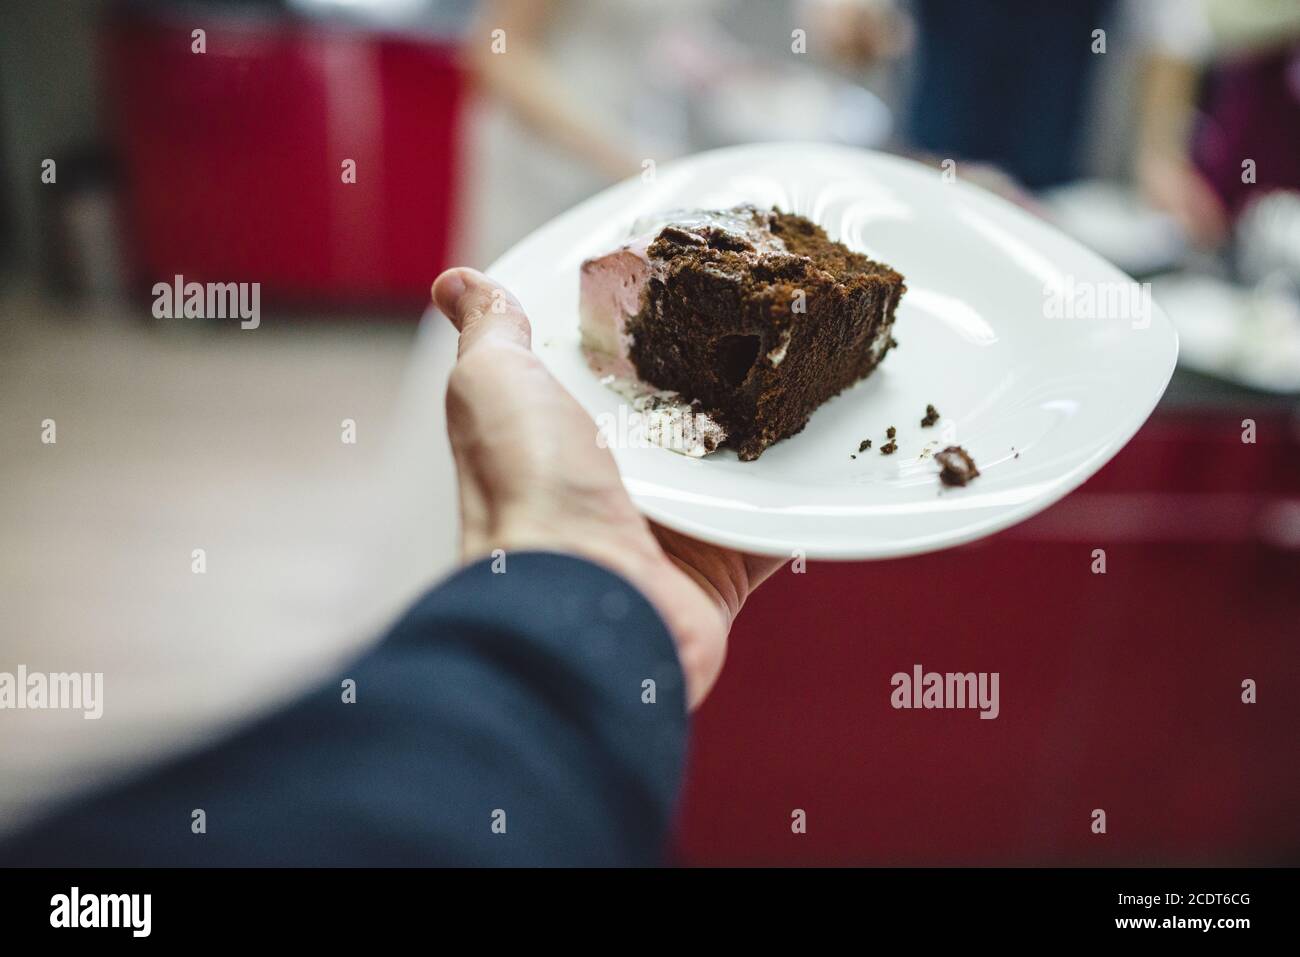 men's hand holding Slice of glazed chocolate wedding cake on the plate Stock Photo